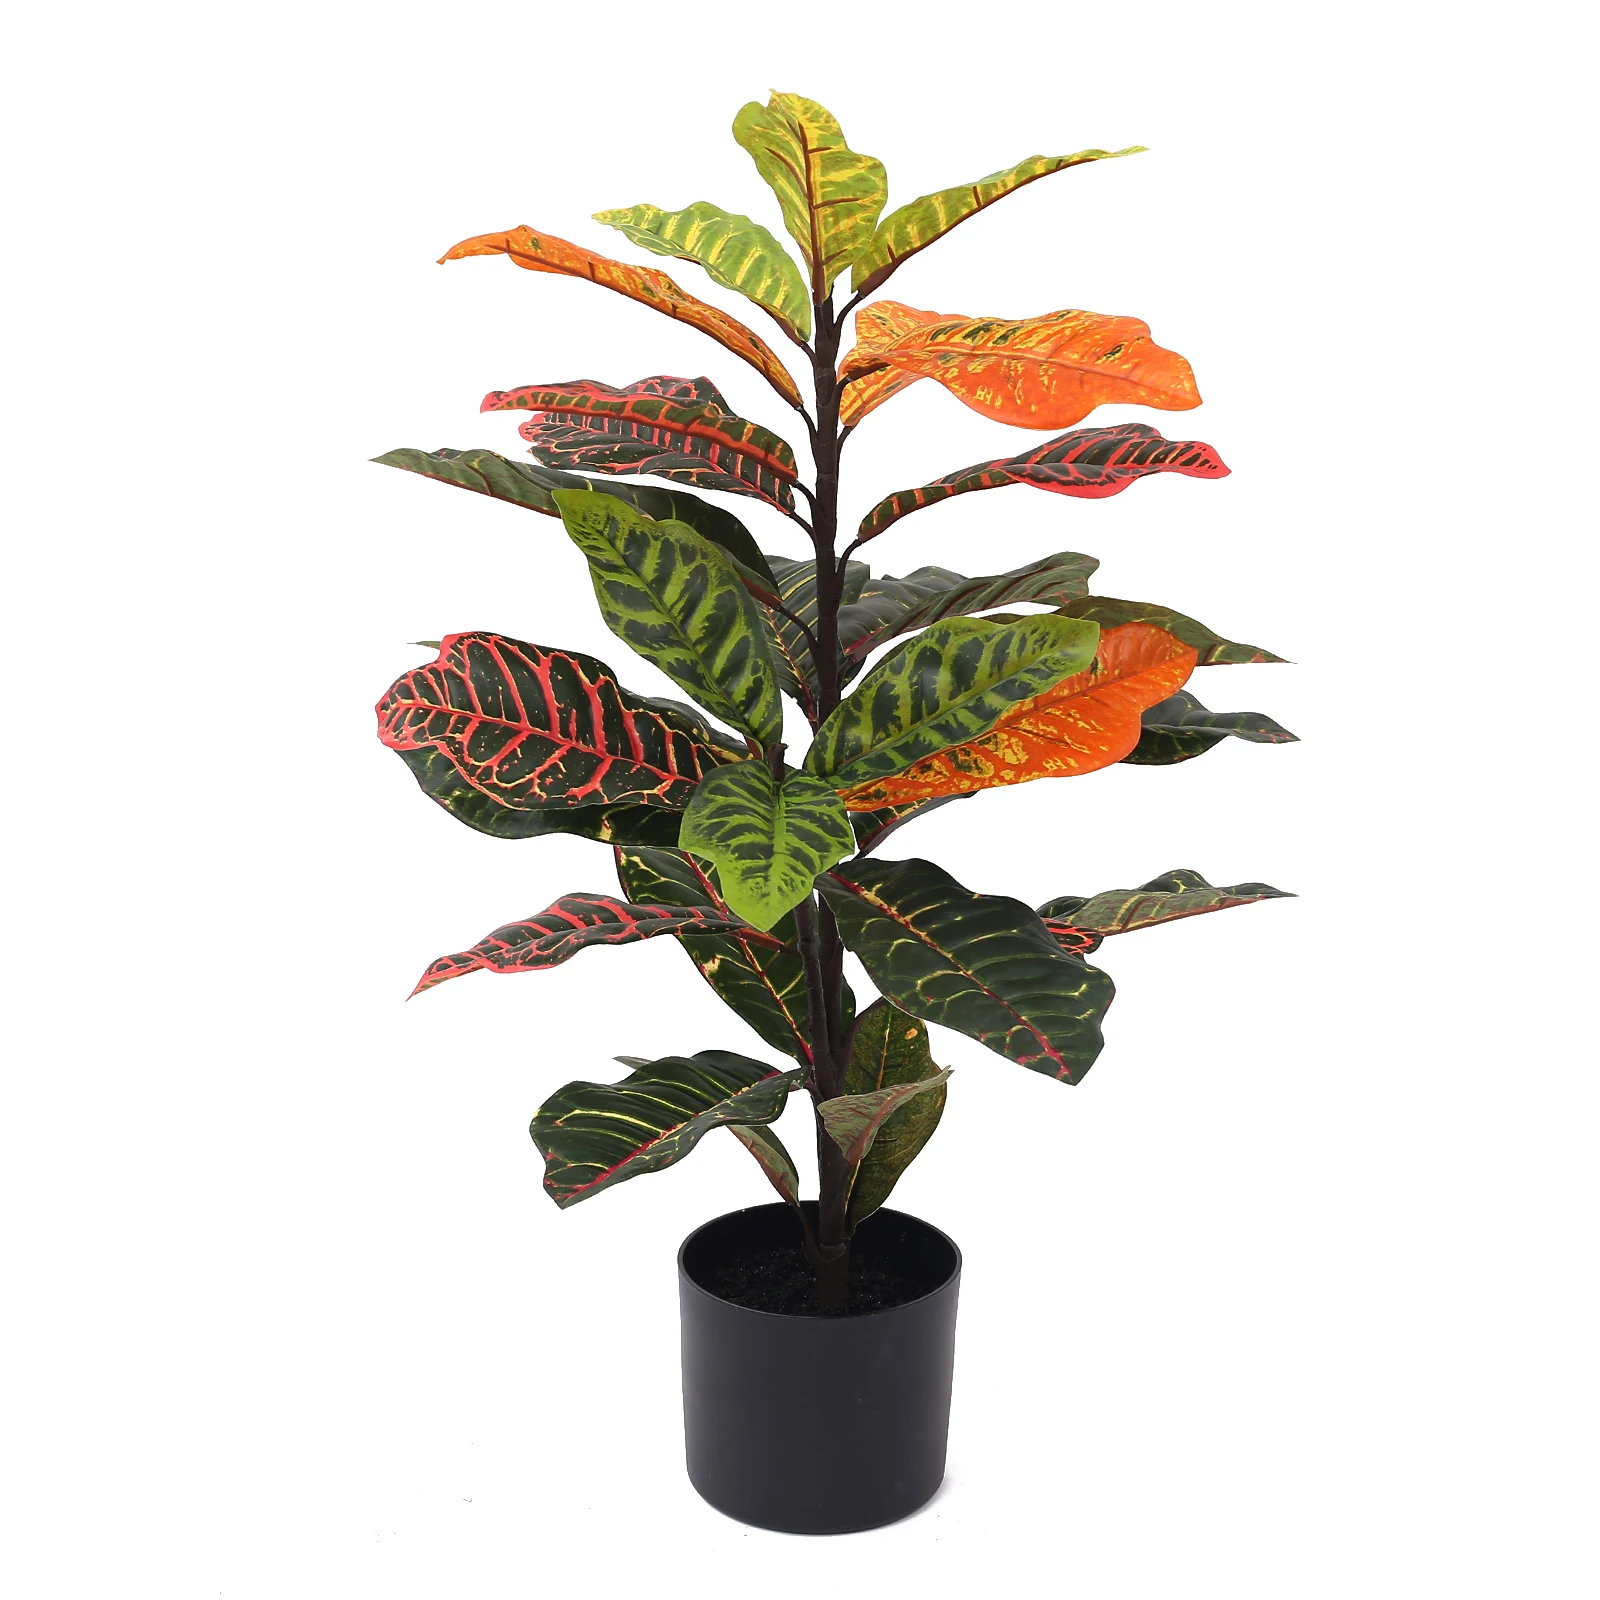 

Amazon Hot Sale Faux Plastic Trees 85cm Artificial Colorful Plants Trees for Home Office Decor, Shown